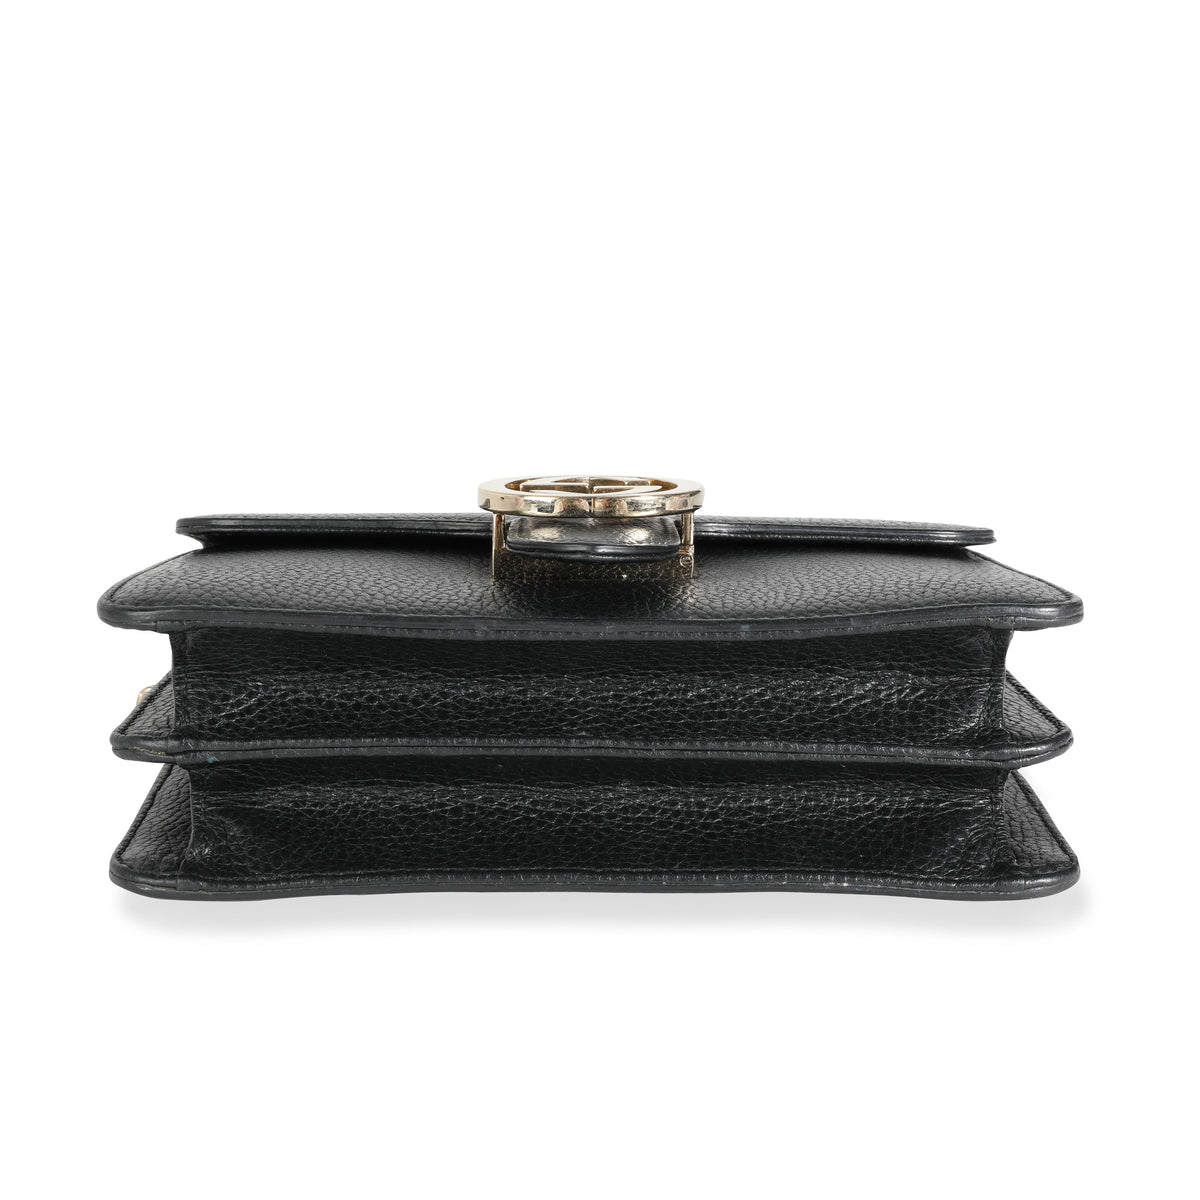 Gucci Black Calfskin Small Interlocking G Dollar Bag